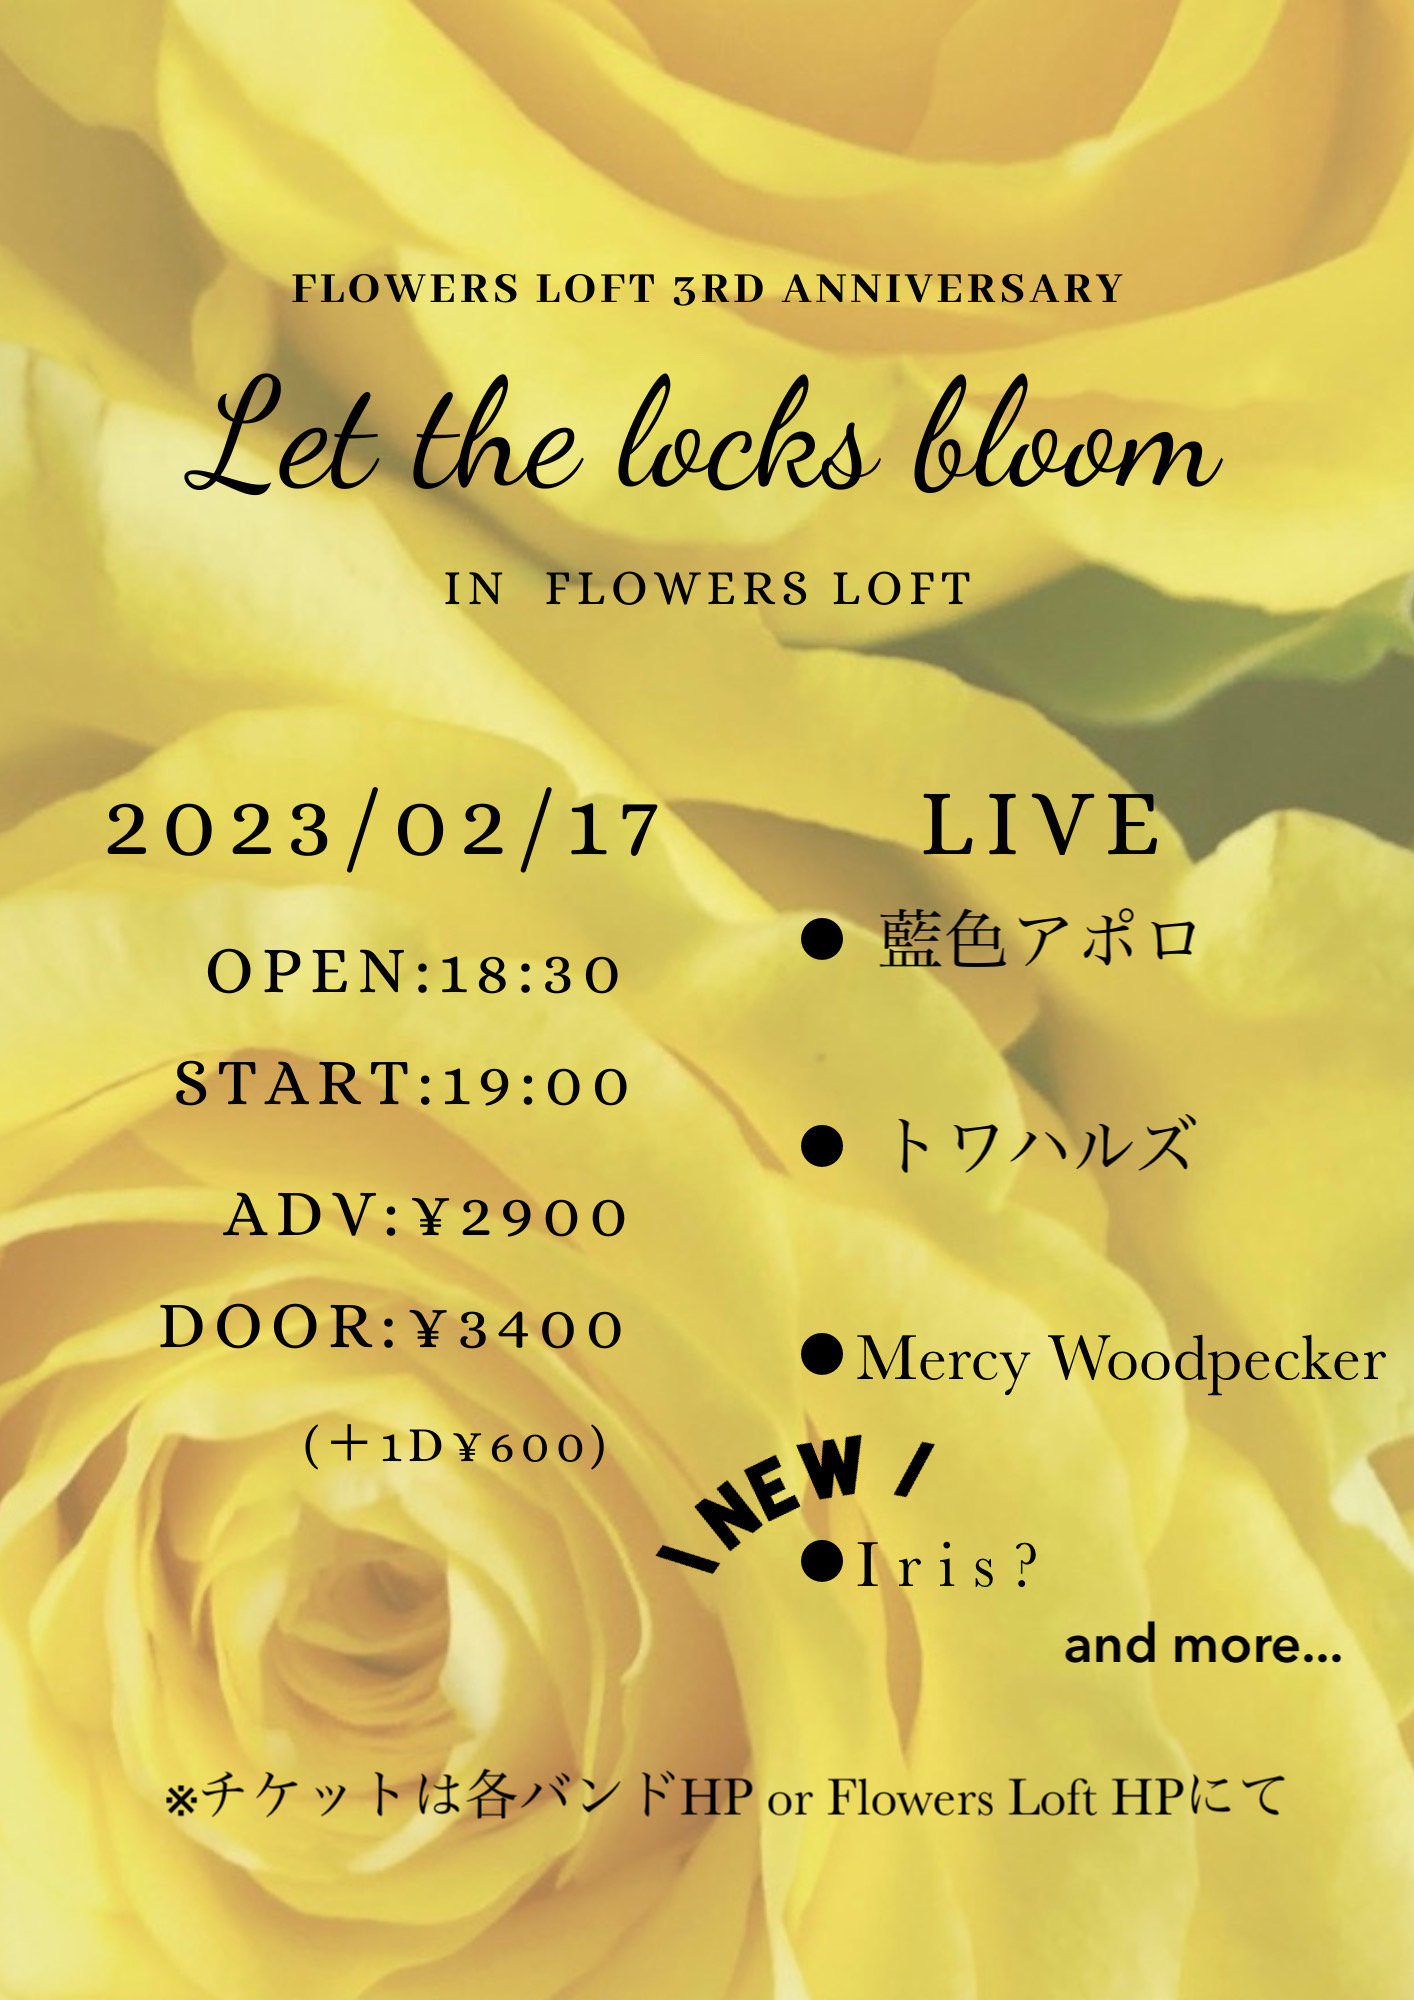 Flowers Loft 3rd Anniversary 『Let the locks bloom』